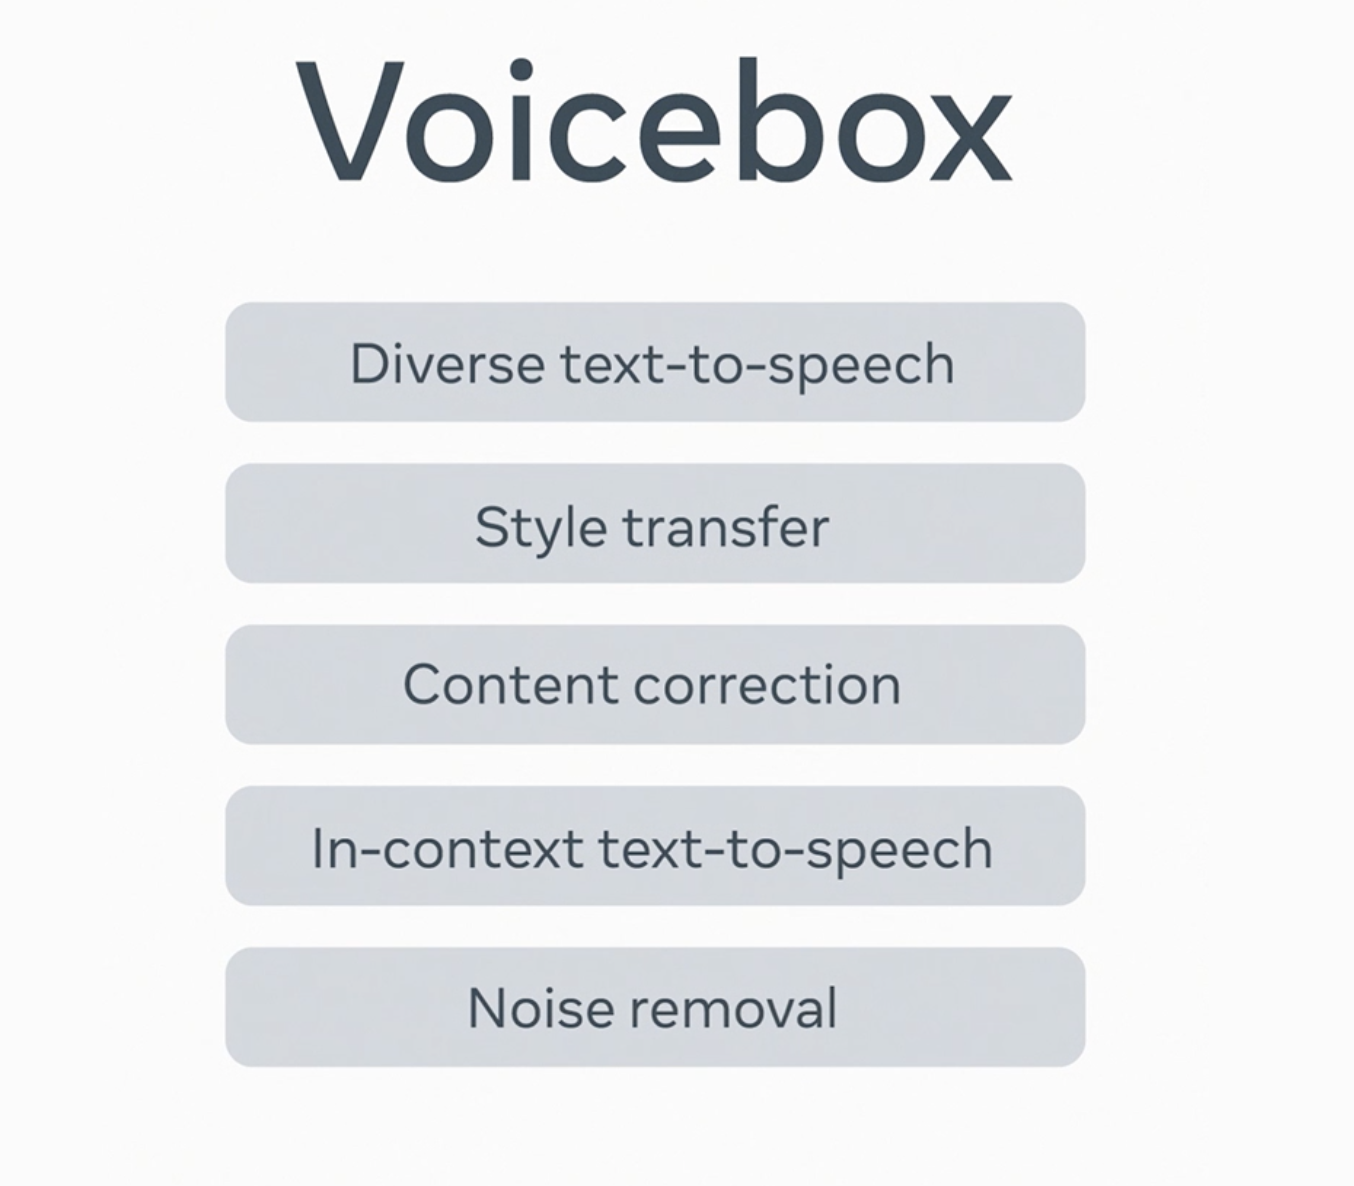 Meta 推出全能语音生成 AI 模型 Voicebox 支持六种语言和多种语音处理功能